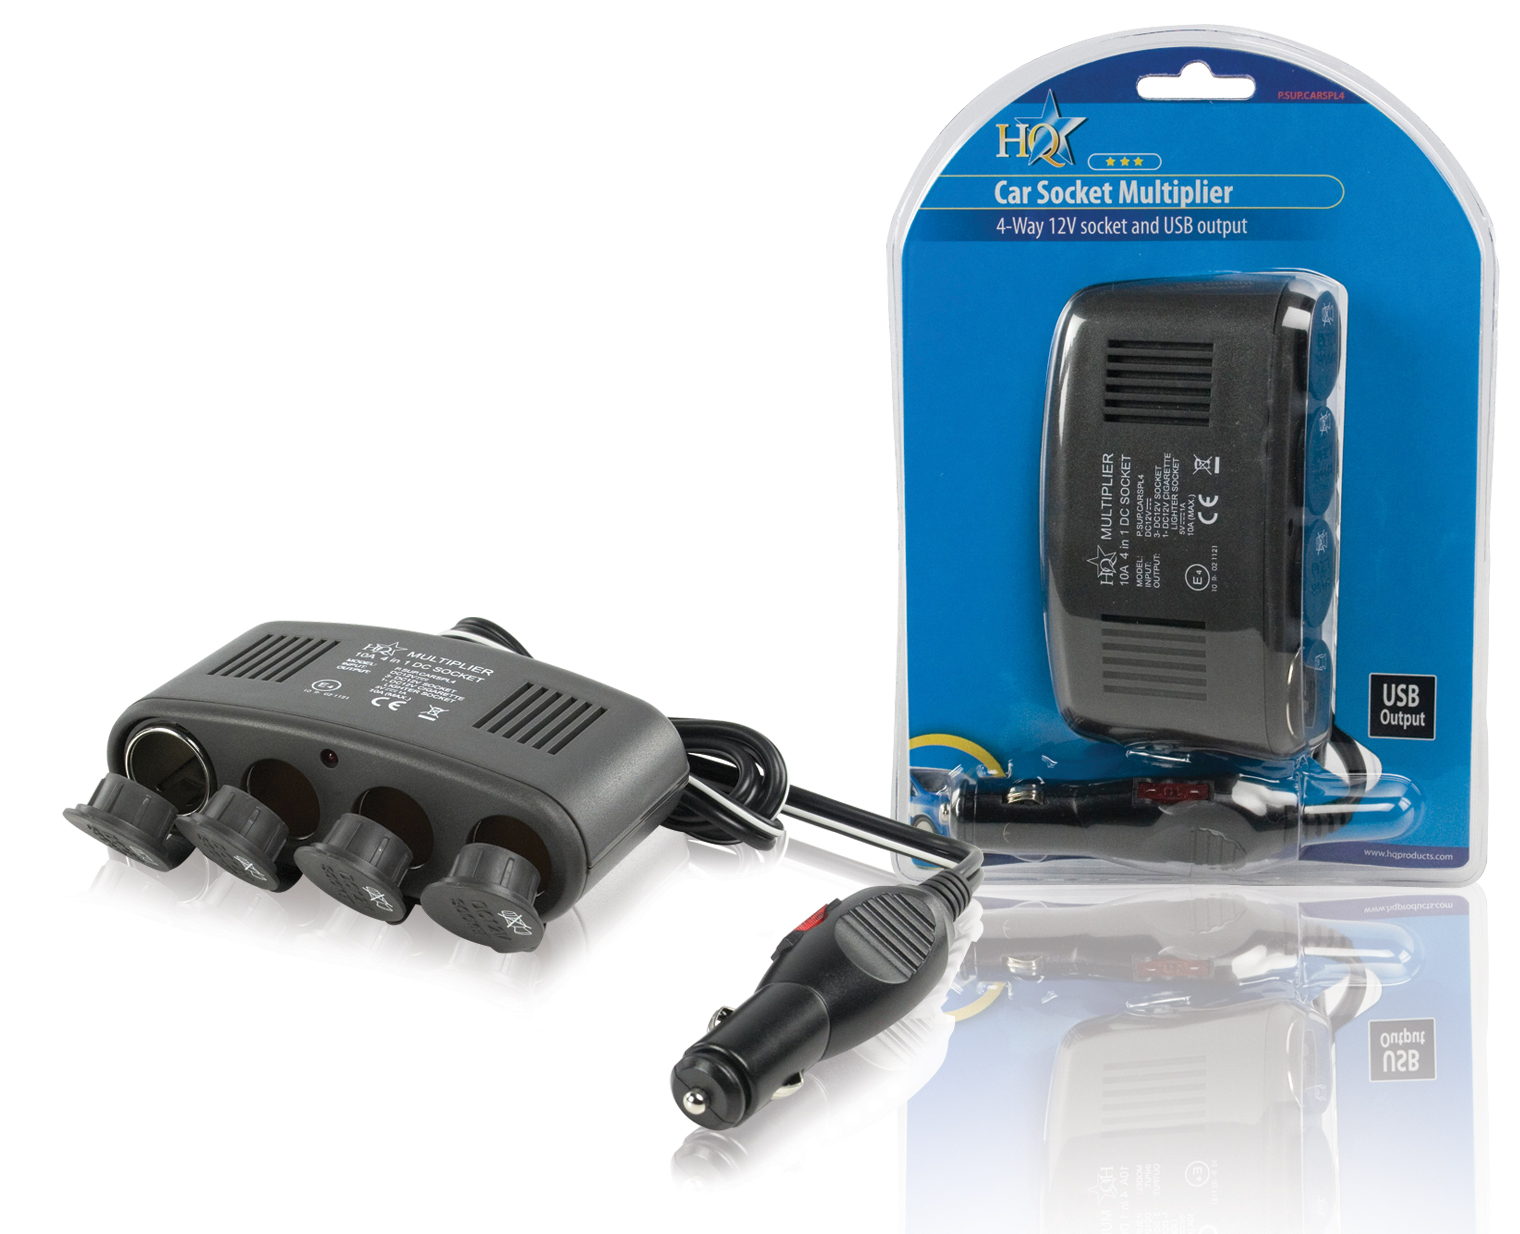 Doebie - 4-weg autoverdeeladapter 12 V + USB vanaf 15 euro en gratis